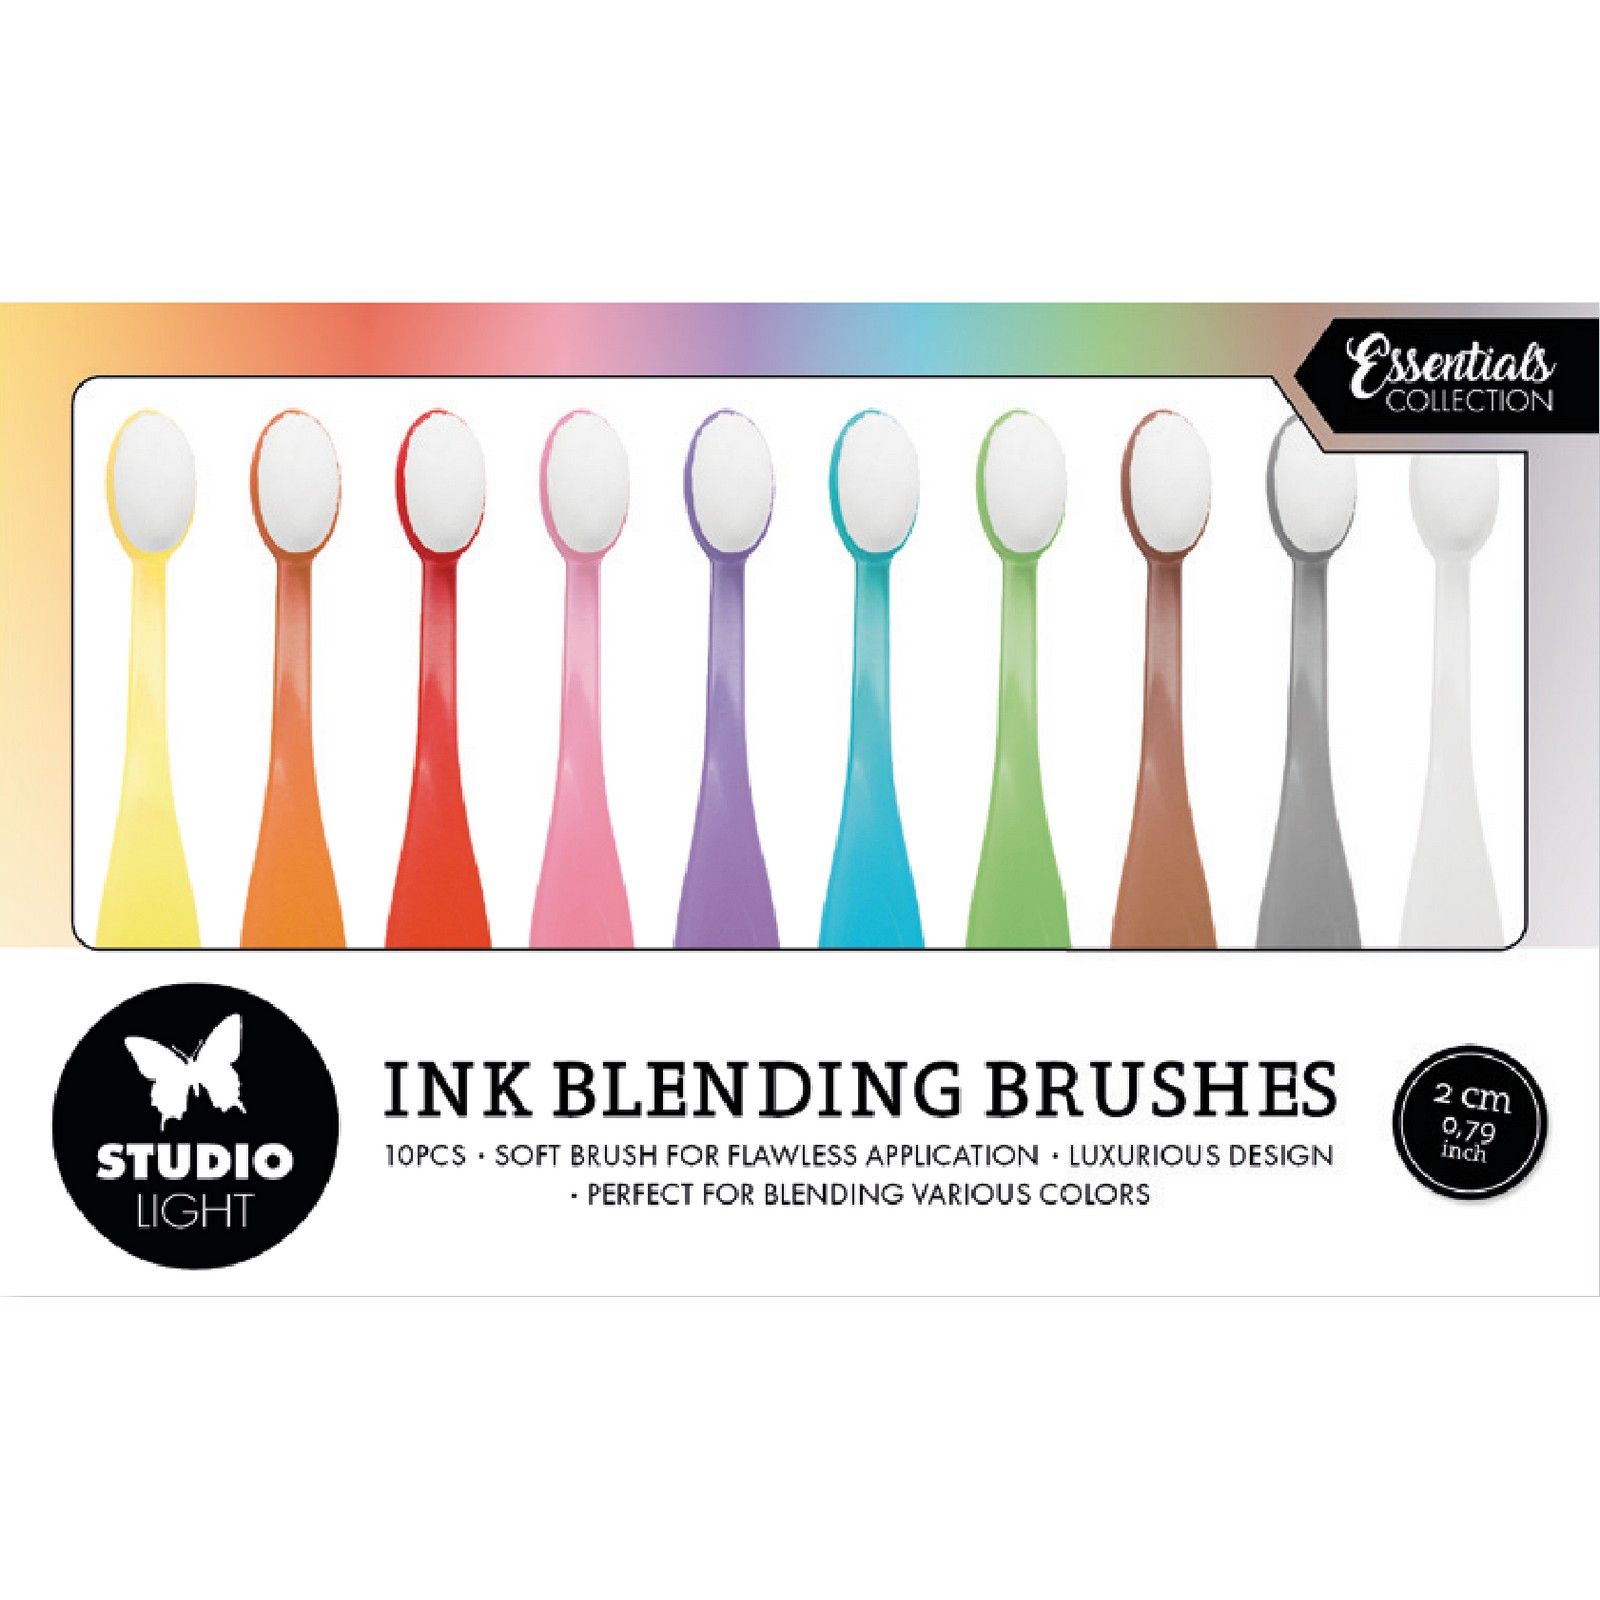 Studio Light • Essentials Blending Brushes 2cm Soft Brush 10pcs